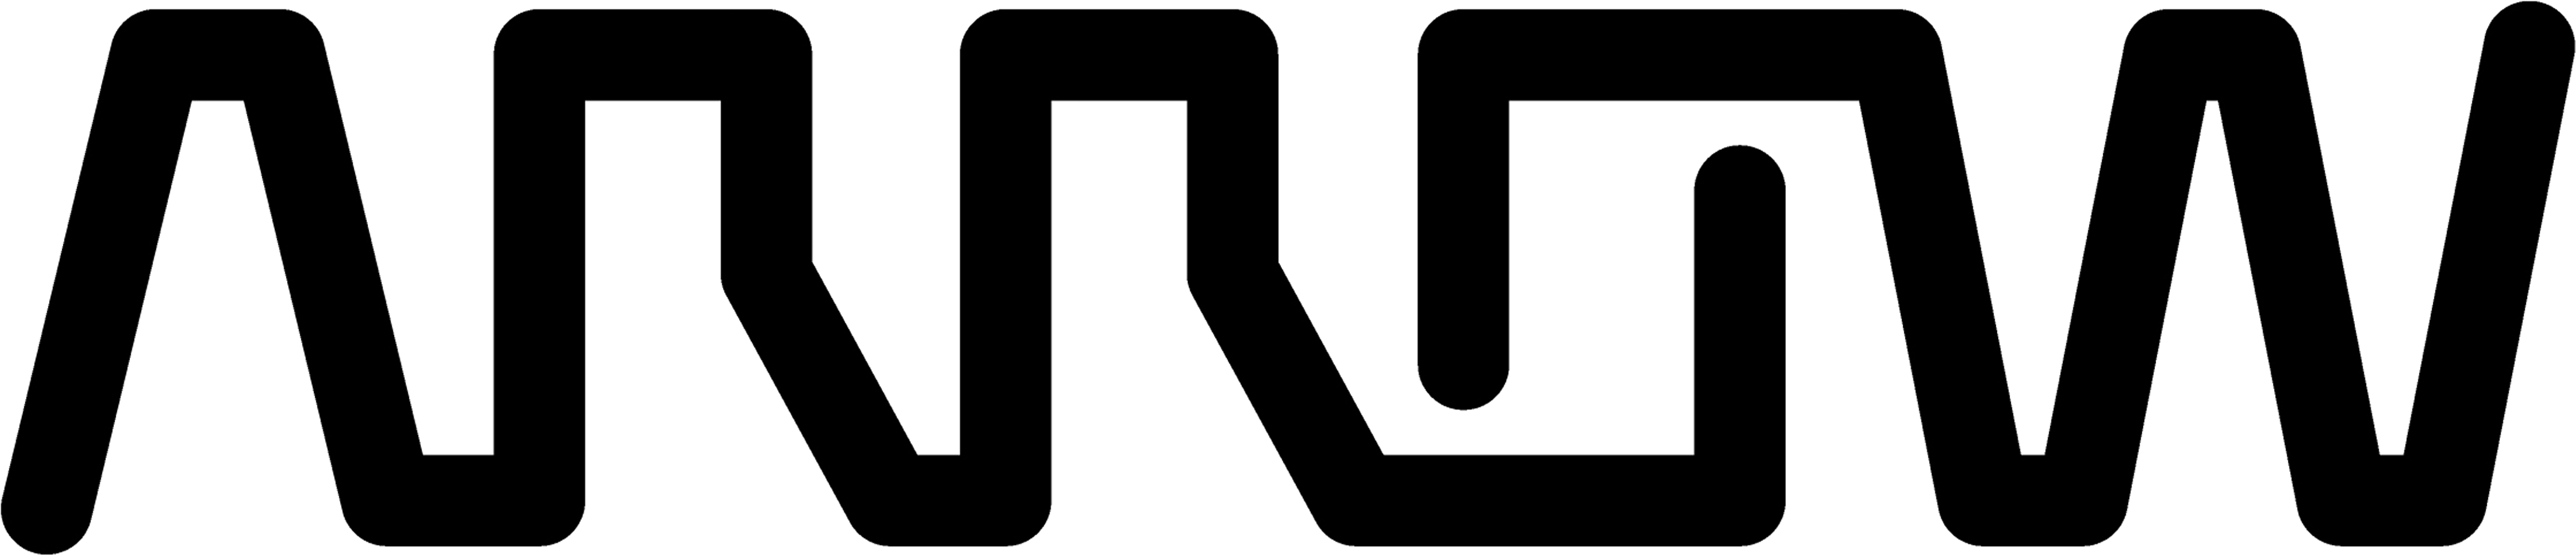 Darryl Shaper - Arrow Electronics Logo Png (4950x1200)